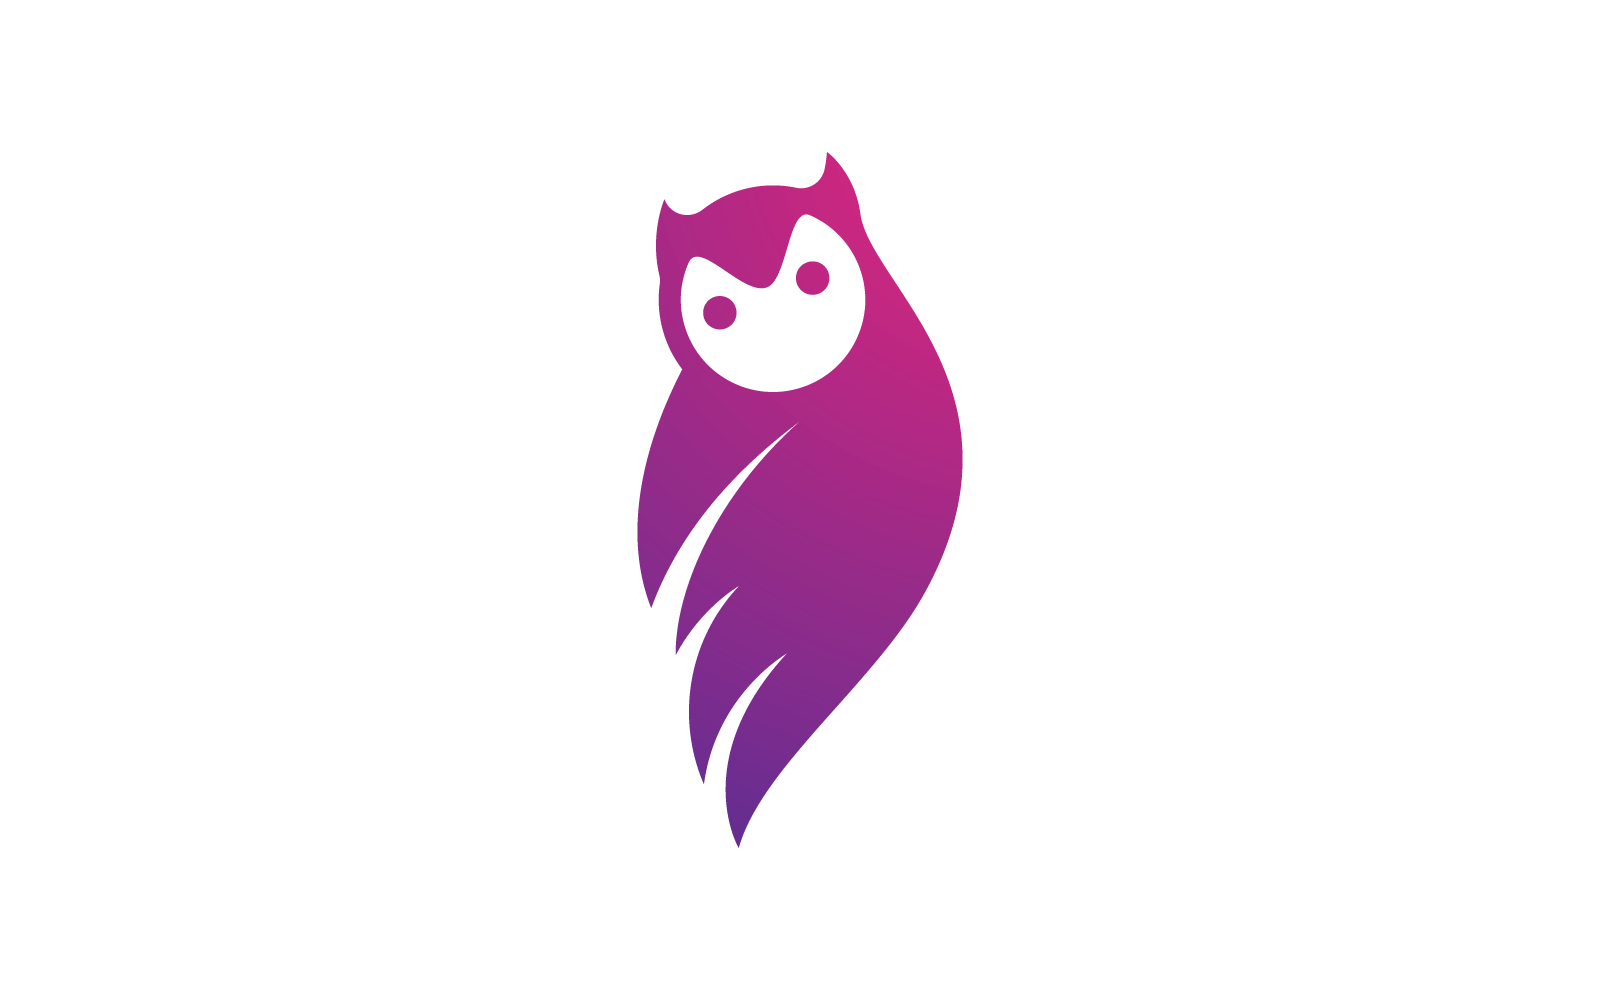 Owl illustration logo vector icon design template